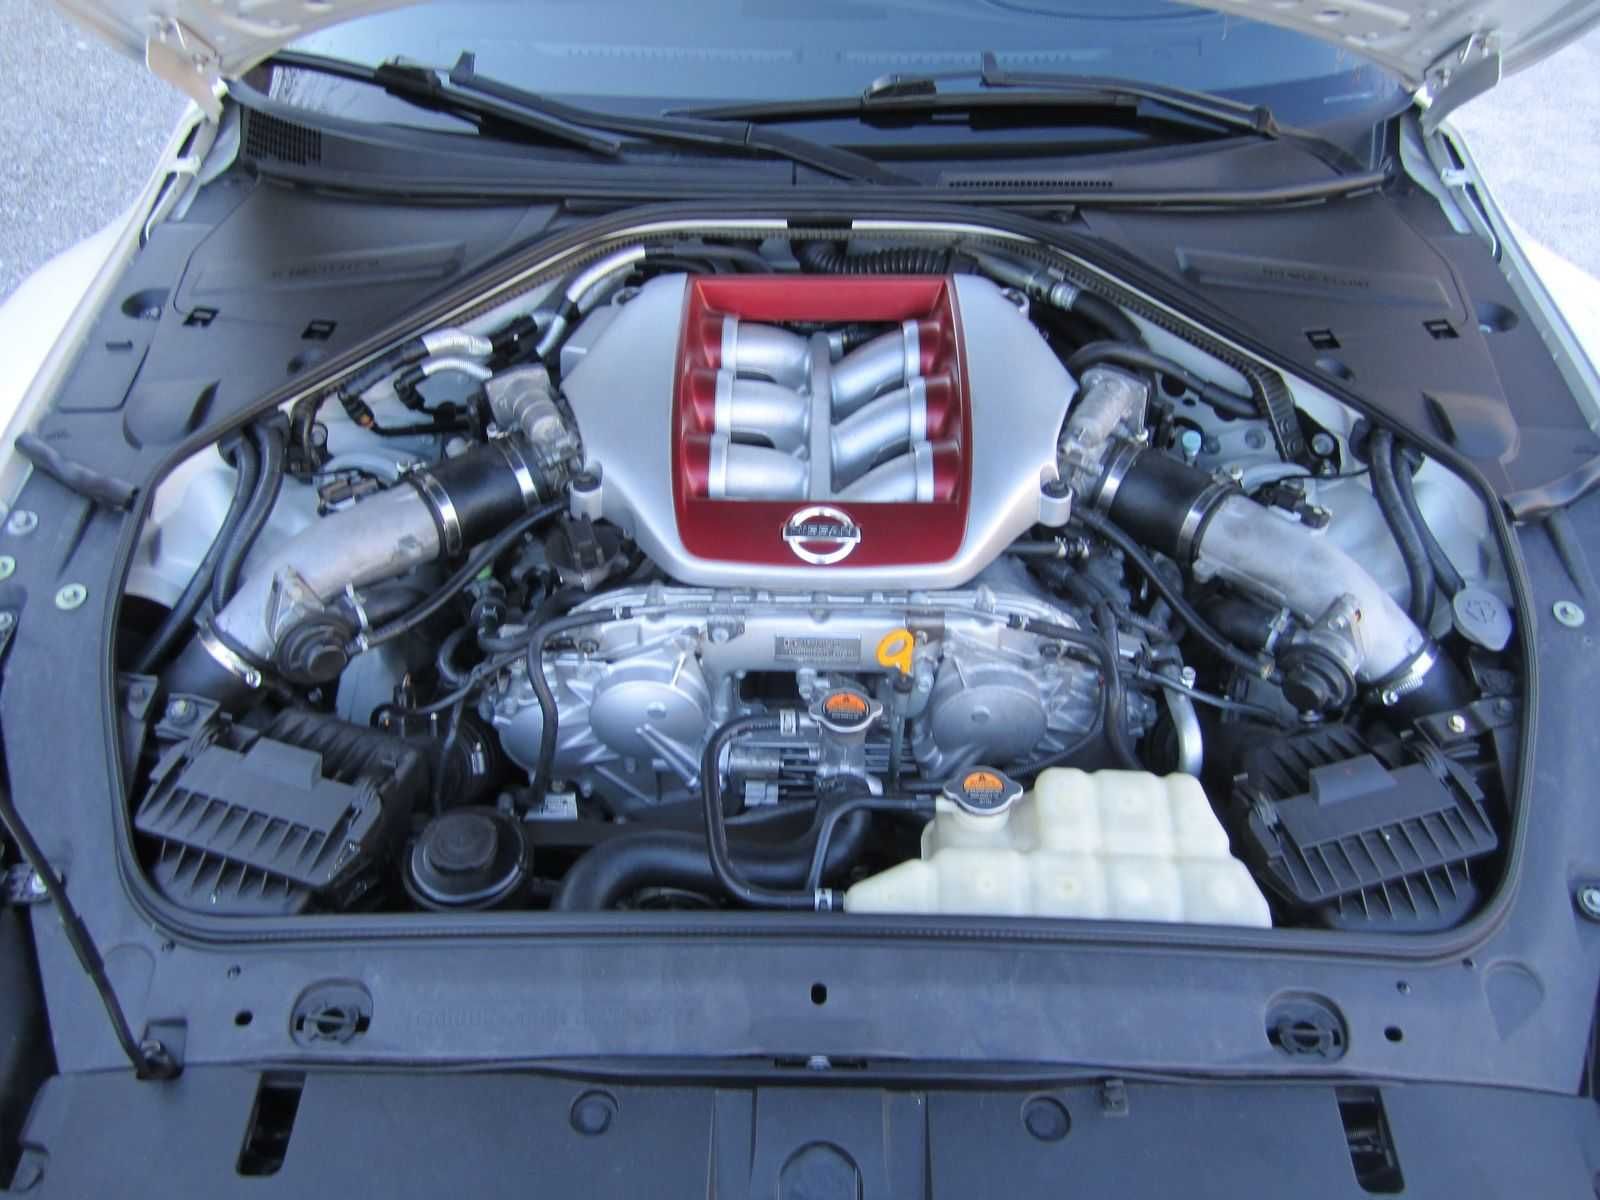 2015 Nissan GT-R Premium